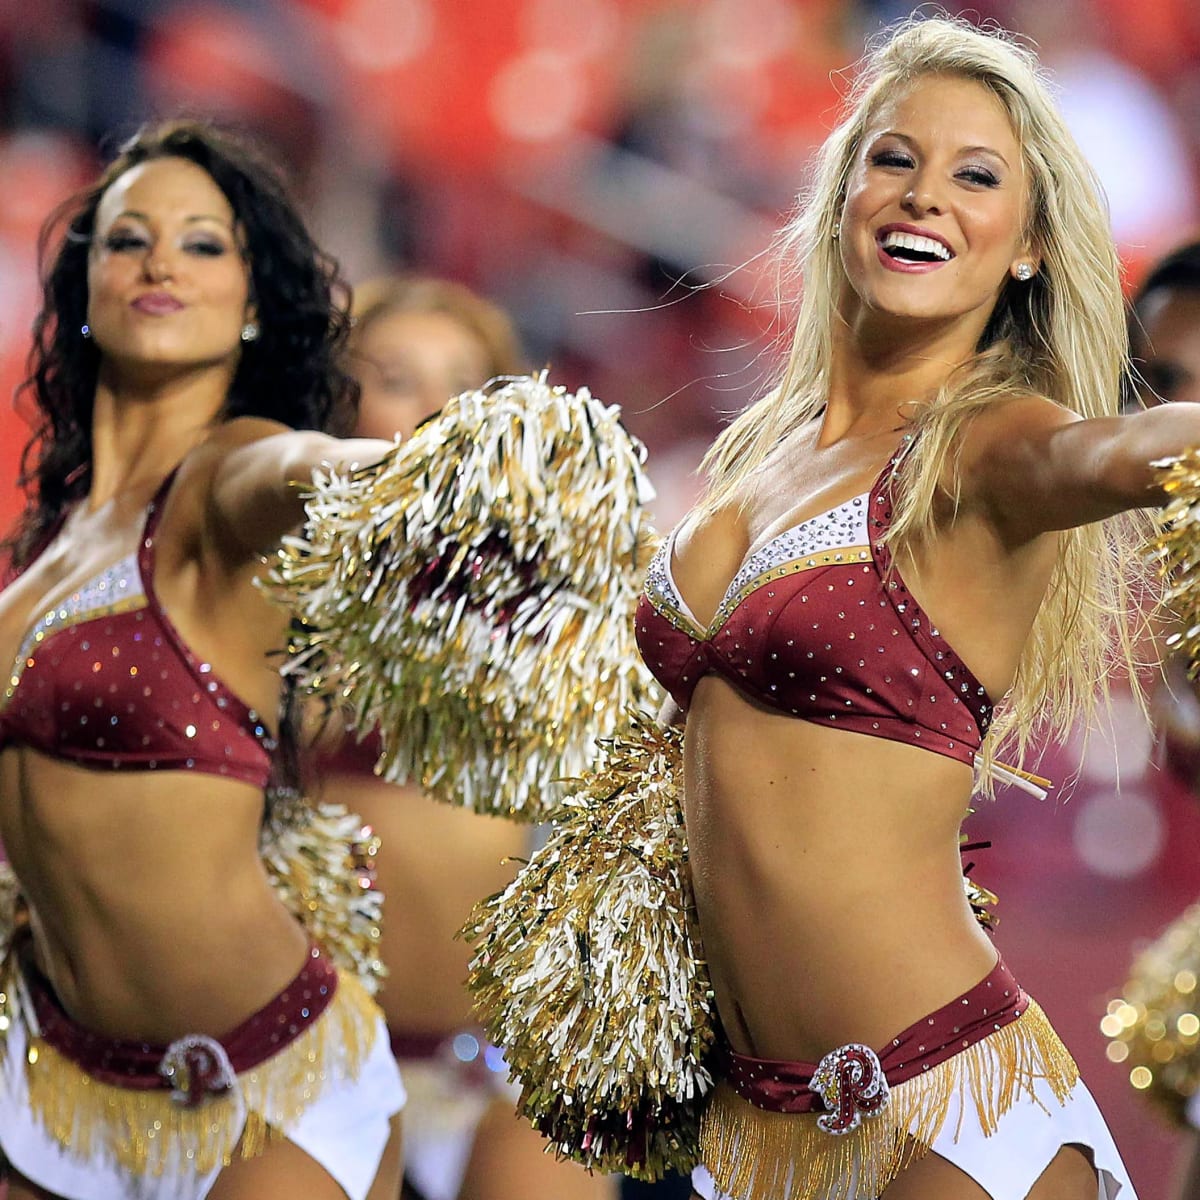 Washington Football Team Replacing Cheerleaders With Coed Dance